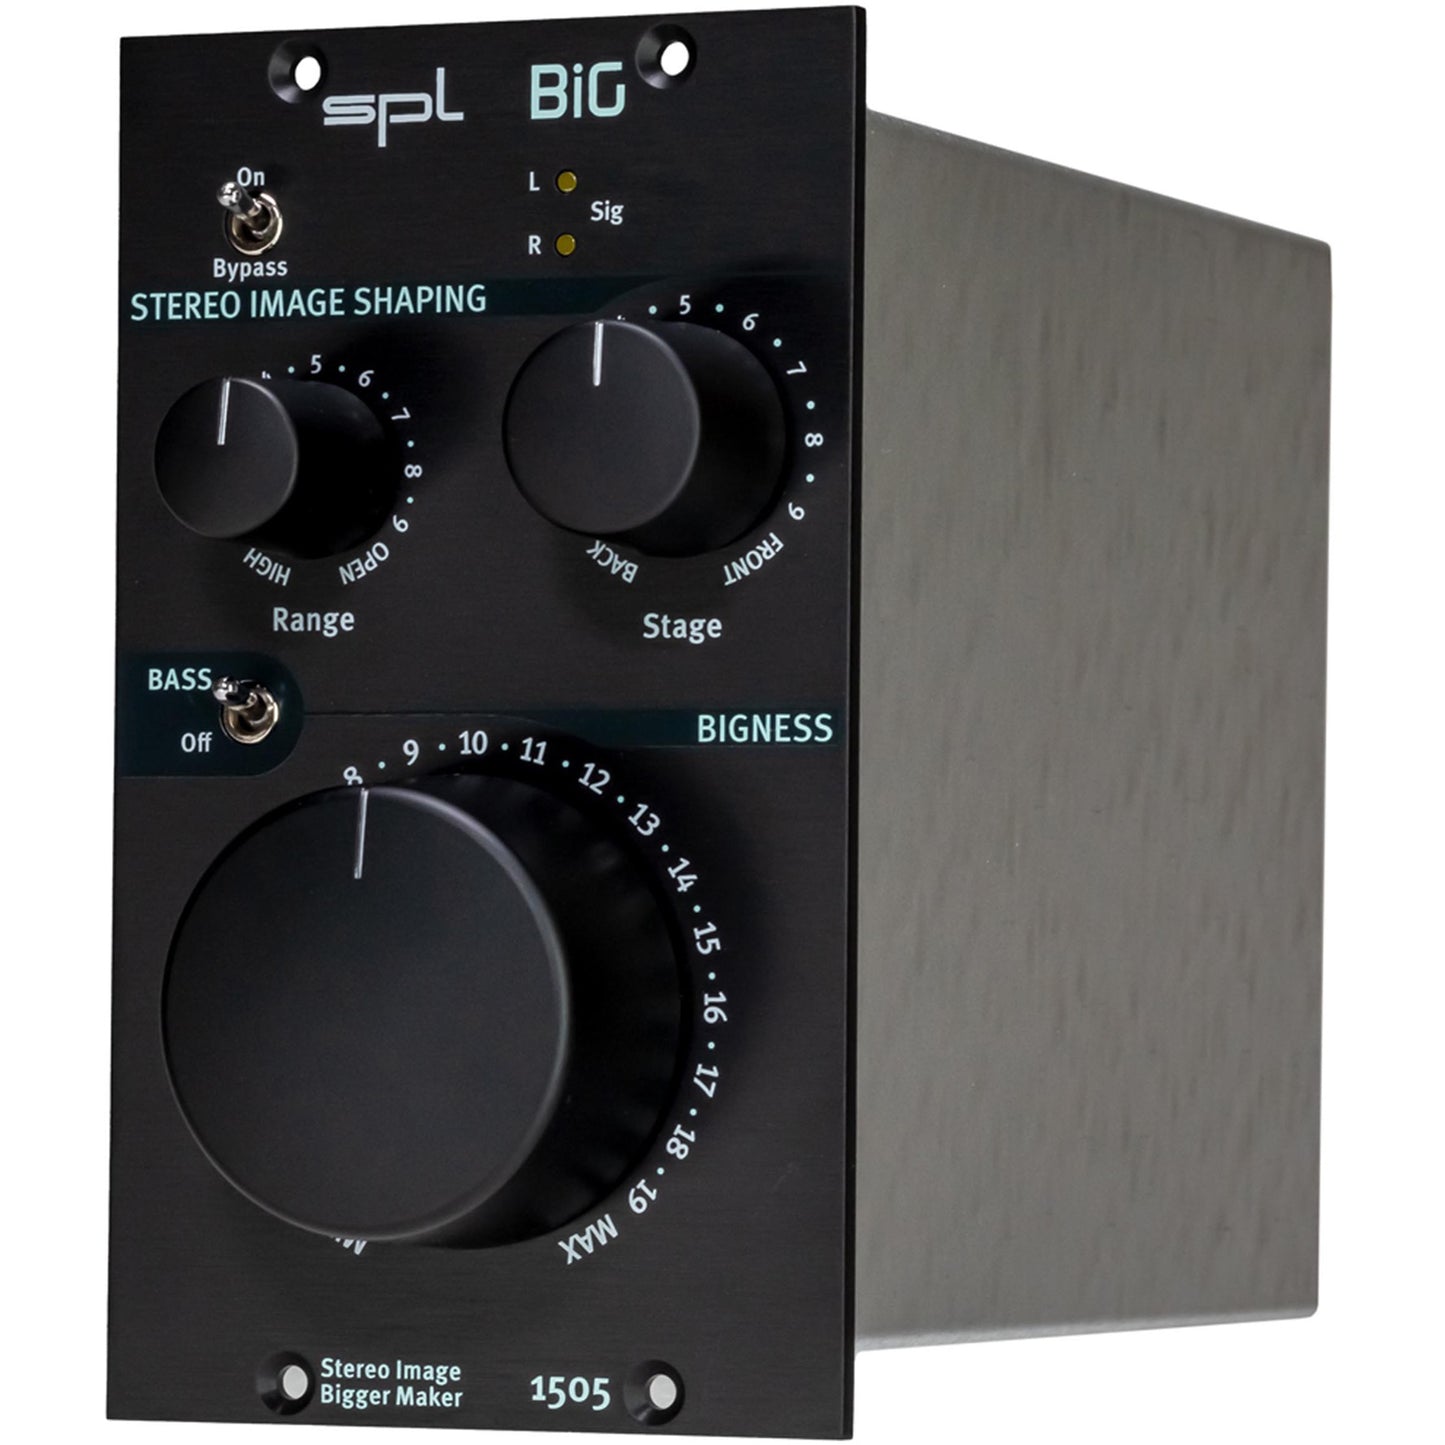 SPL BiG 500 Series Stereo Image Shaper